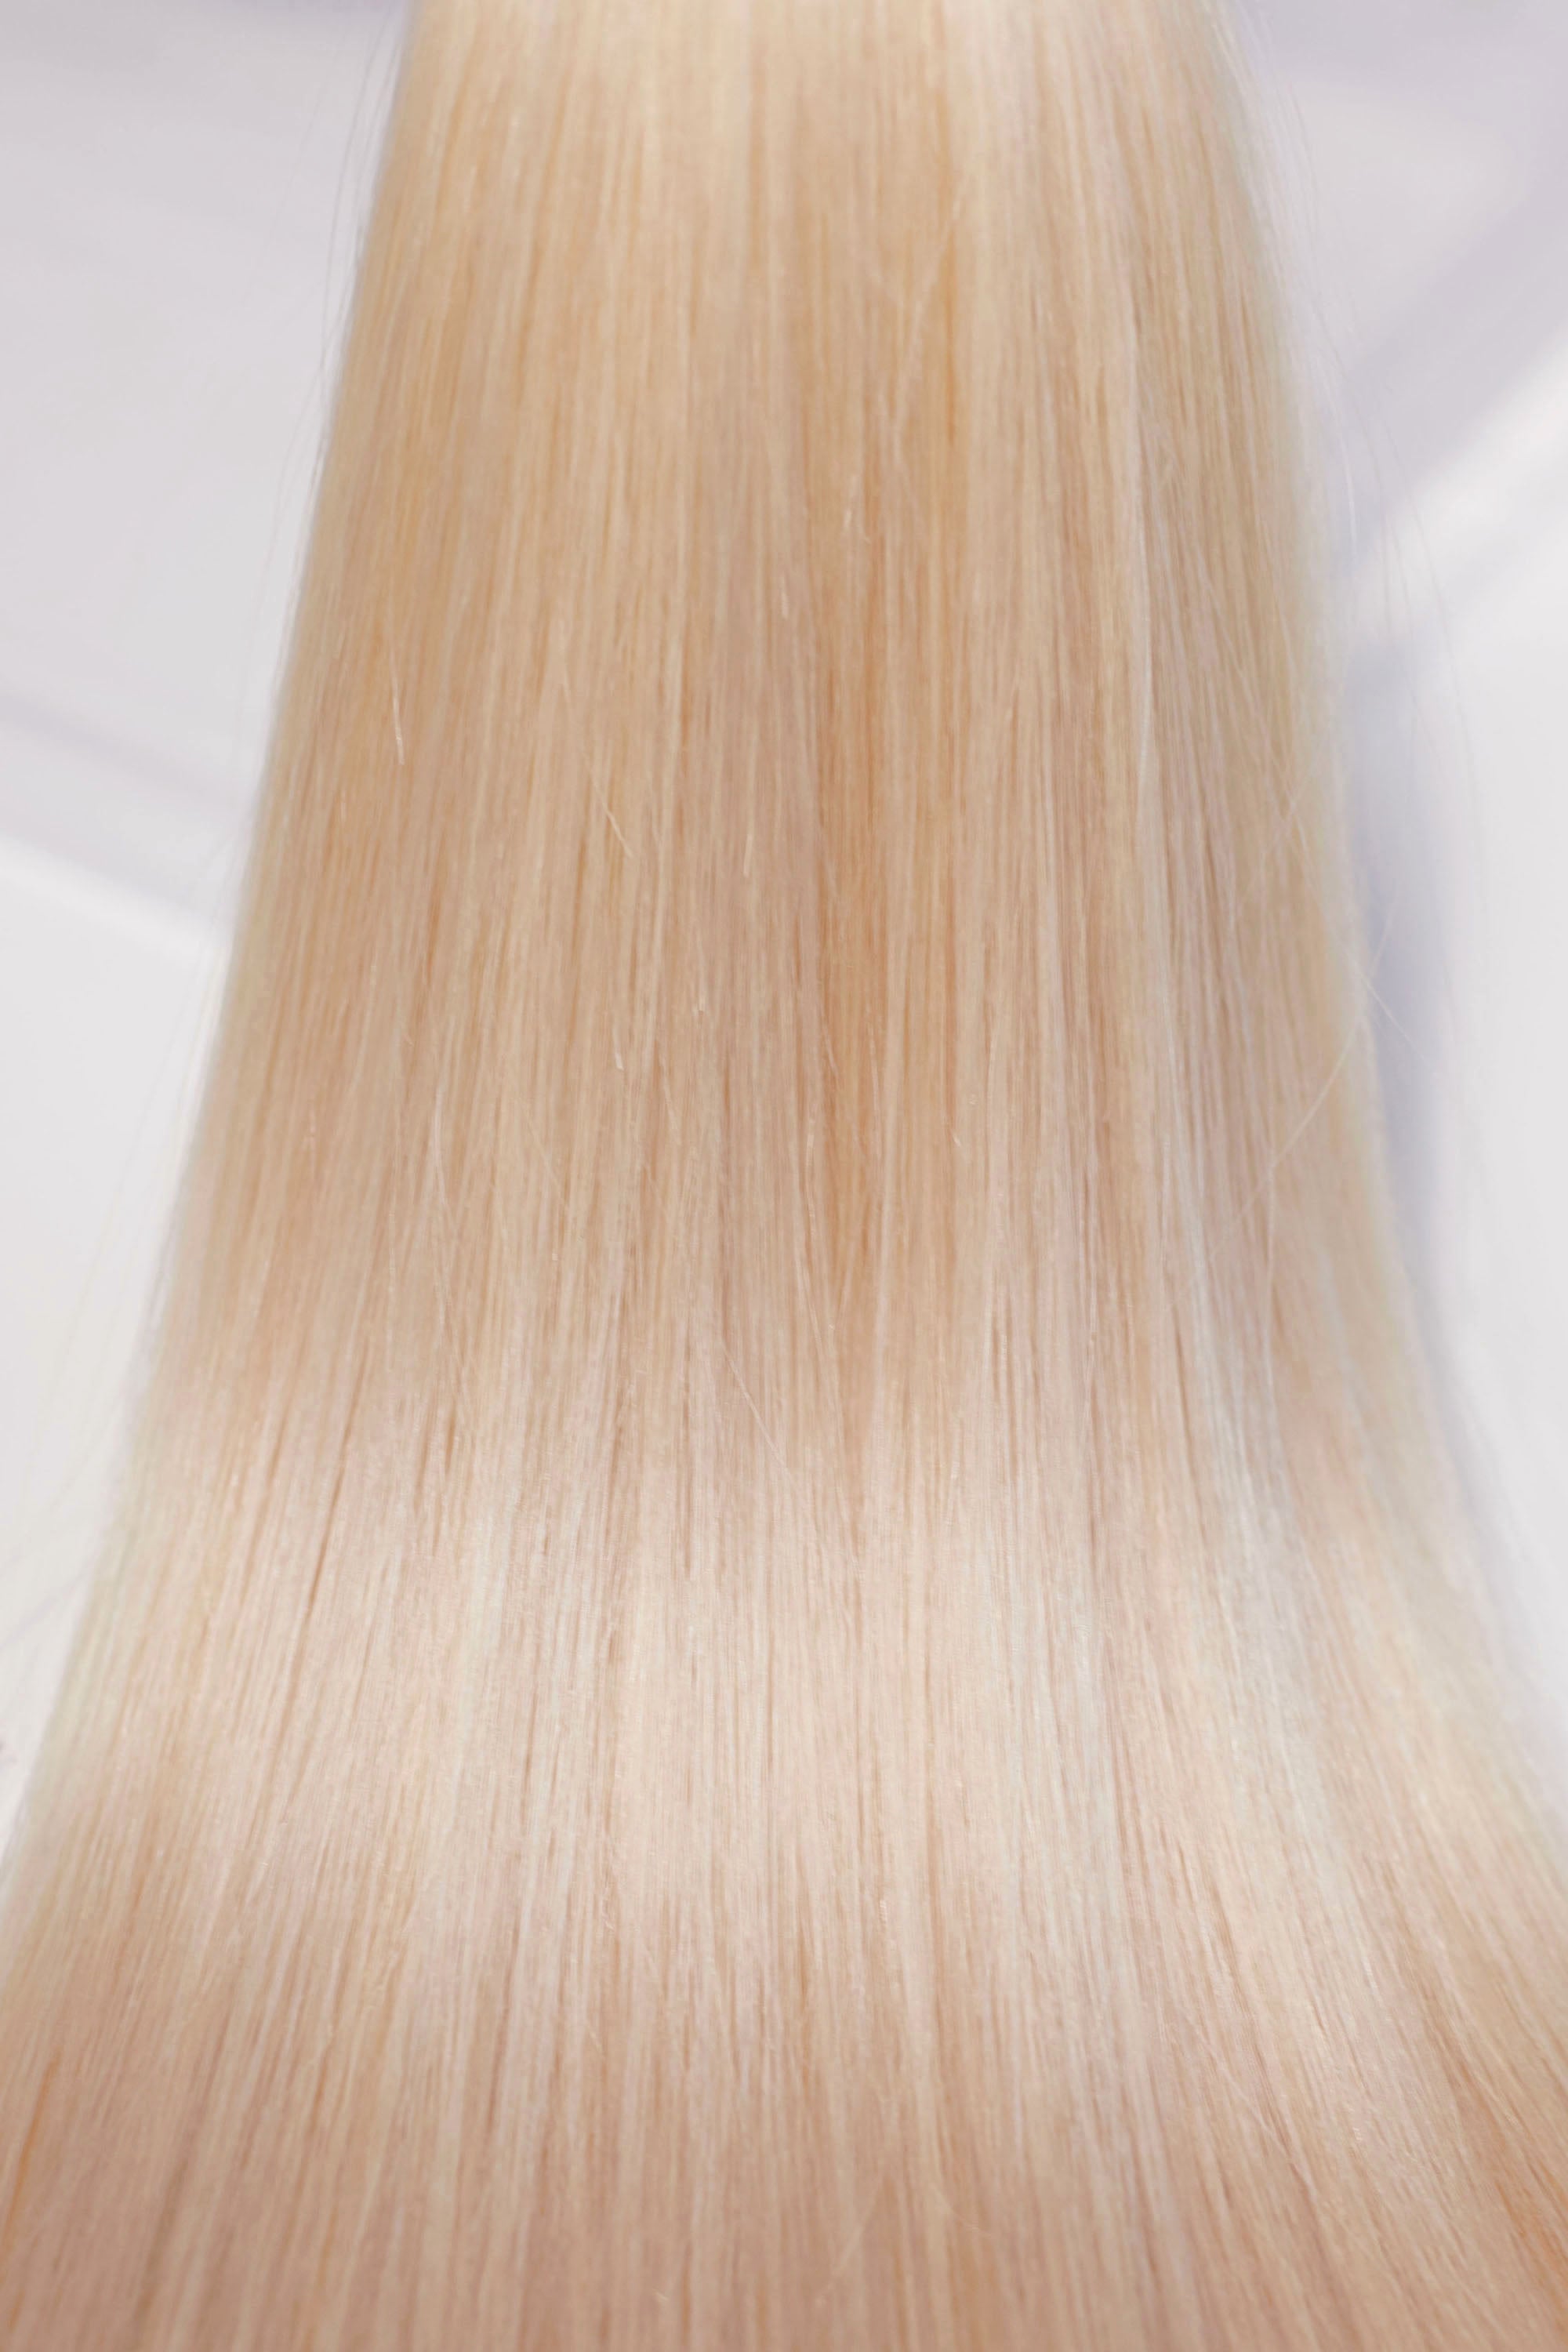 Behair professional Keratin Tip "Premium" 22" (55cm) Natural Straight Platinum Blond #60 - 25g (Standart - 0.7g each pcs) hair extensions